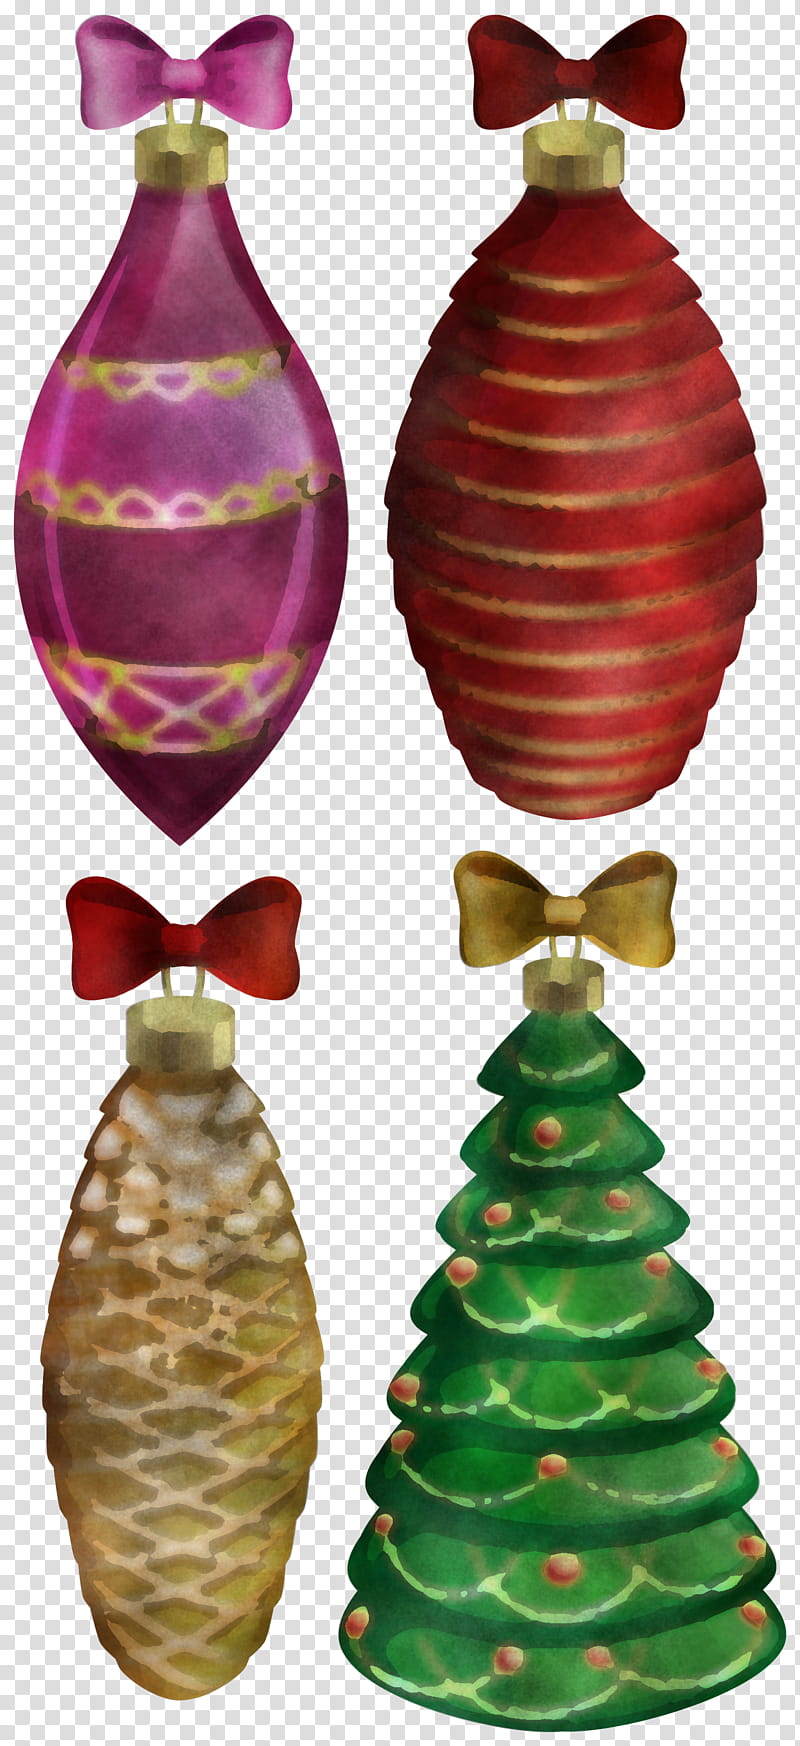 Christmas ornament, Holiday Ornament, Christmas Decoration, Finial, Christmas Tree, Interior Design, Pine Family, Fir transparent background PNG clipart